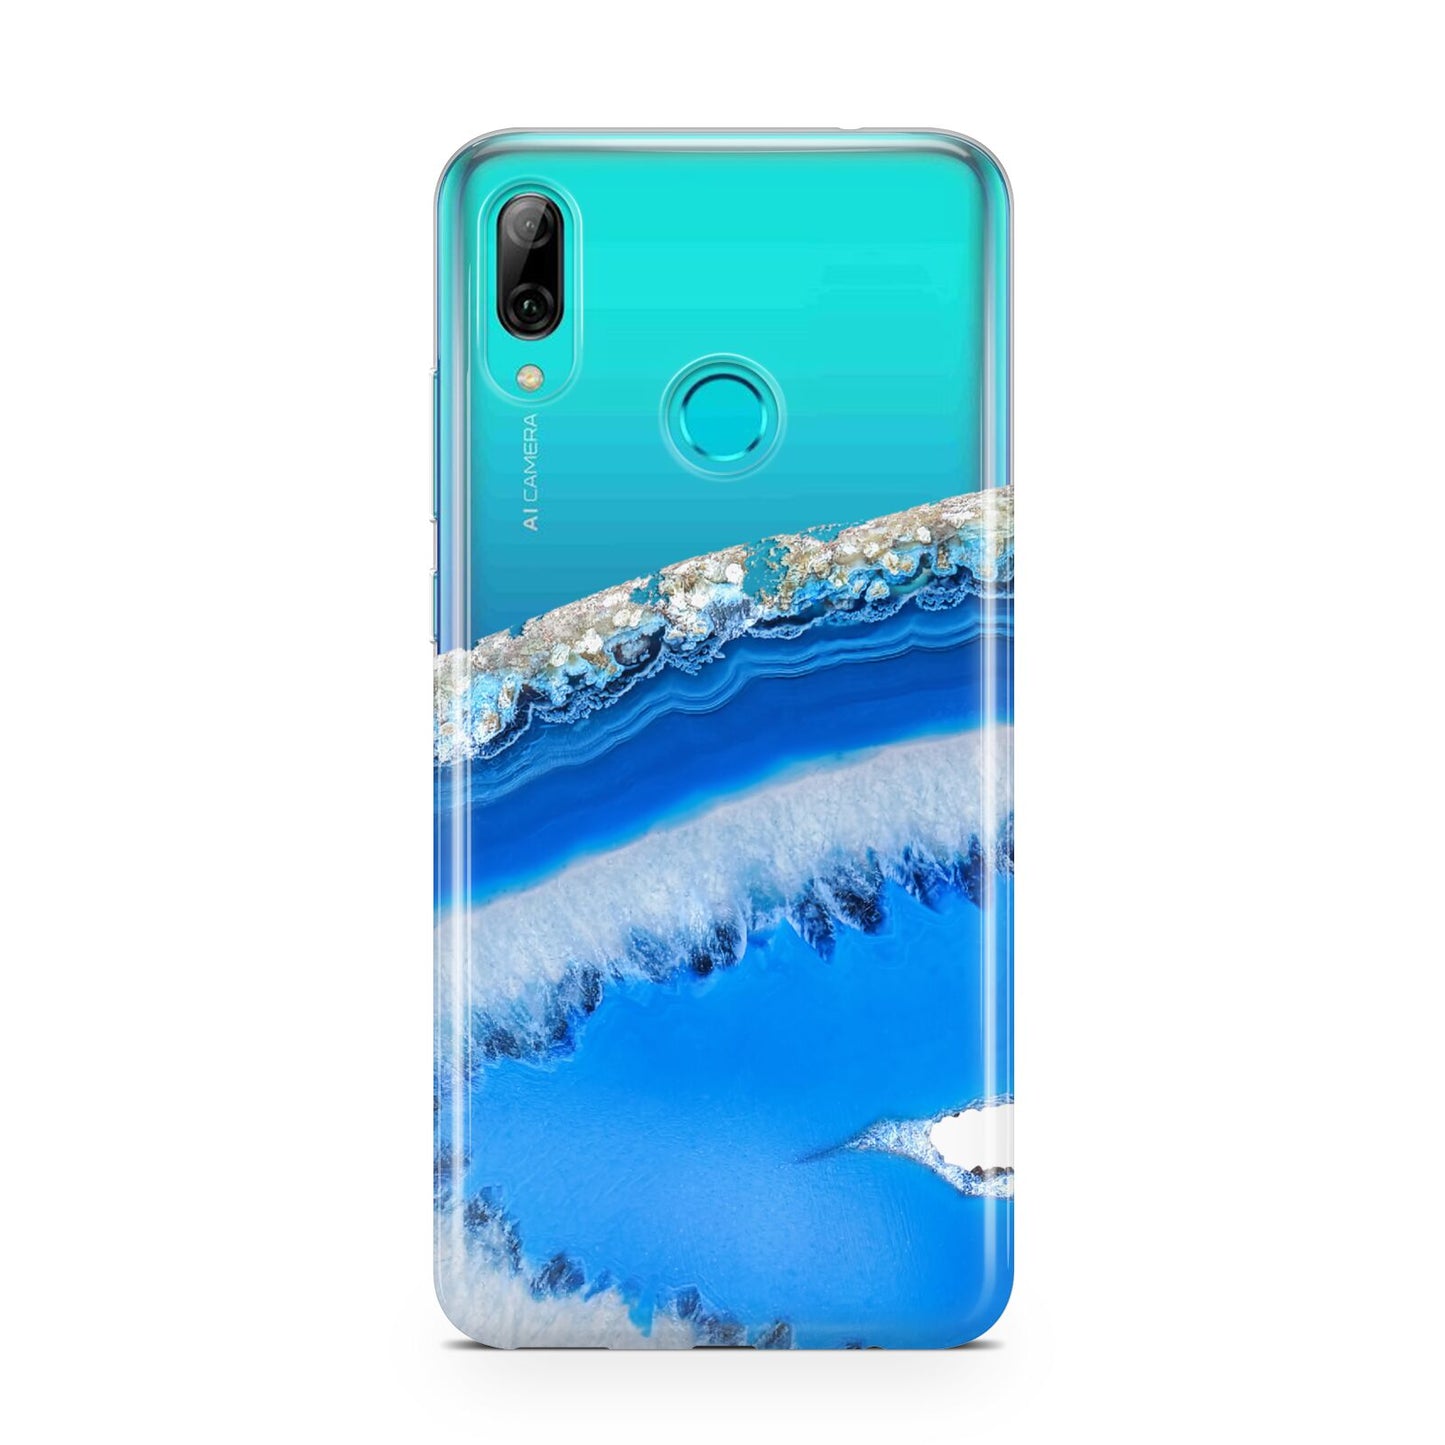 Agate Blue Huawei P Smart 2019 Case